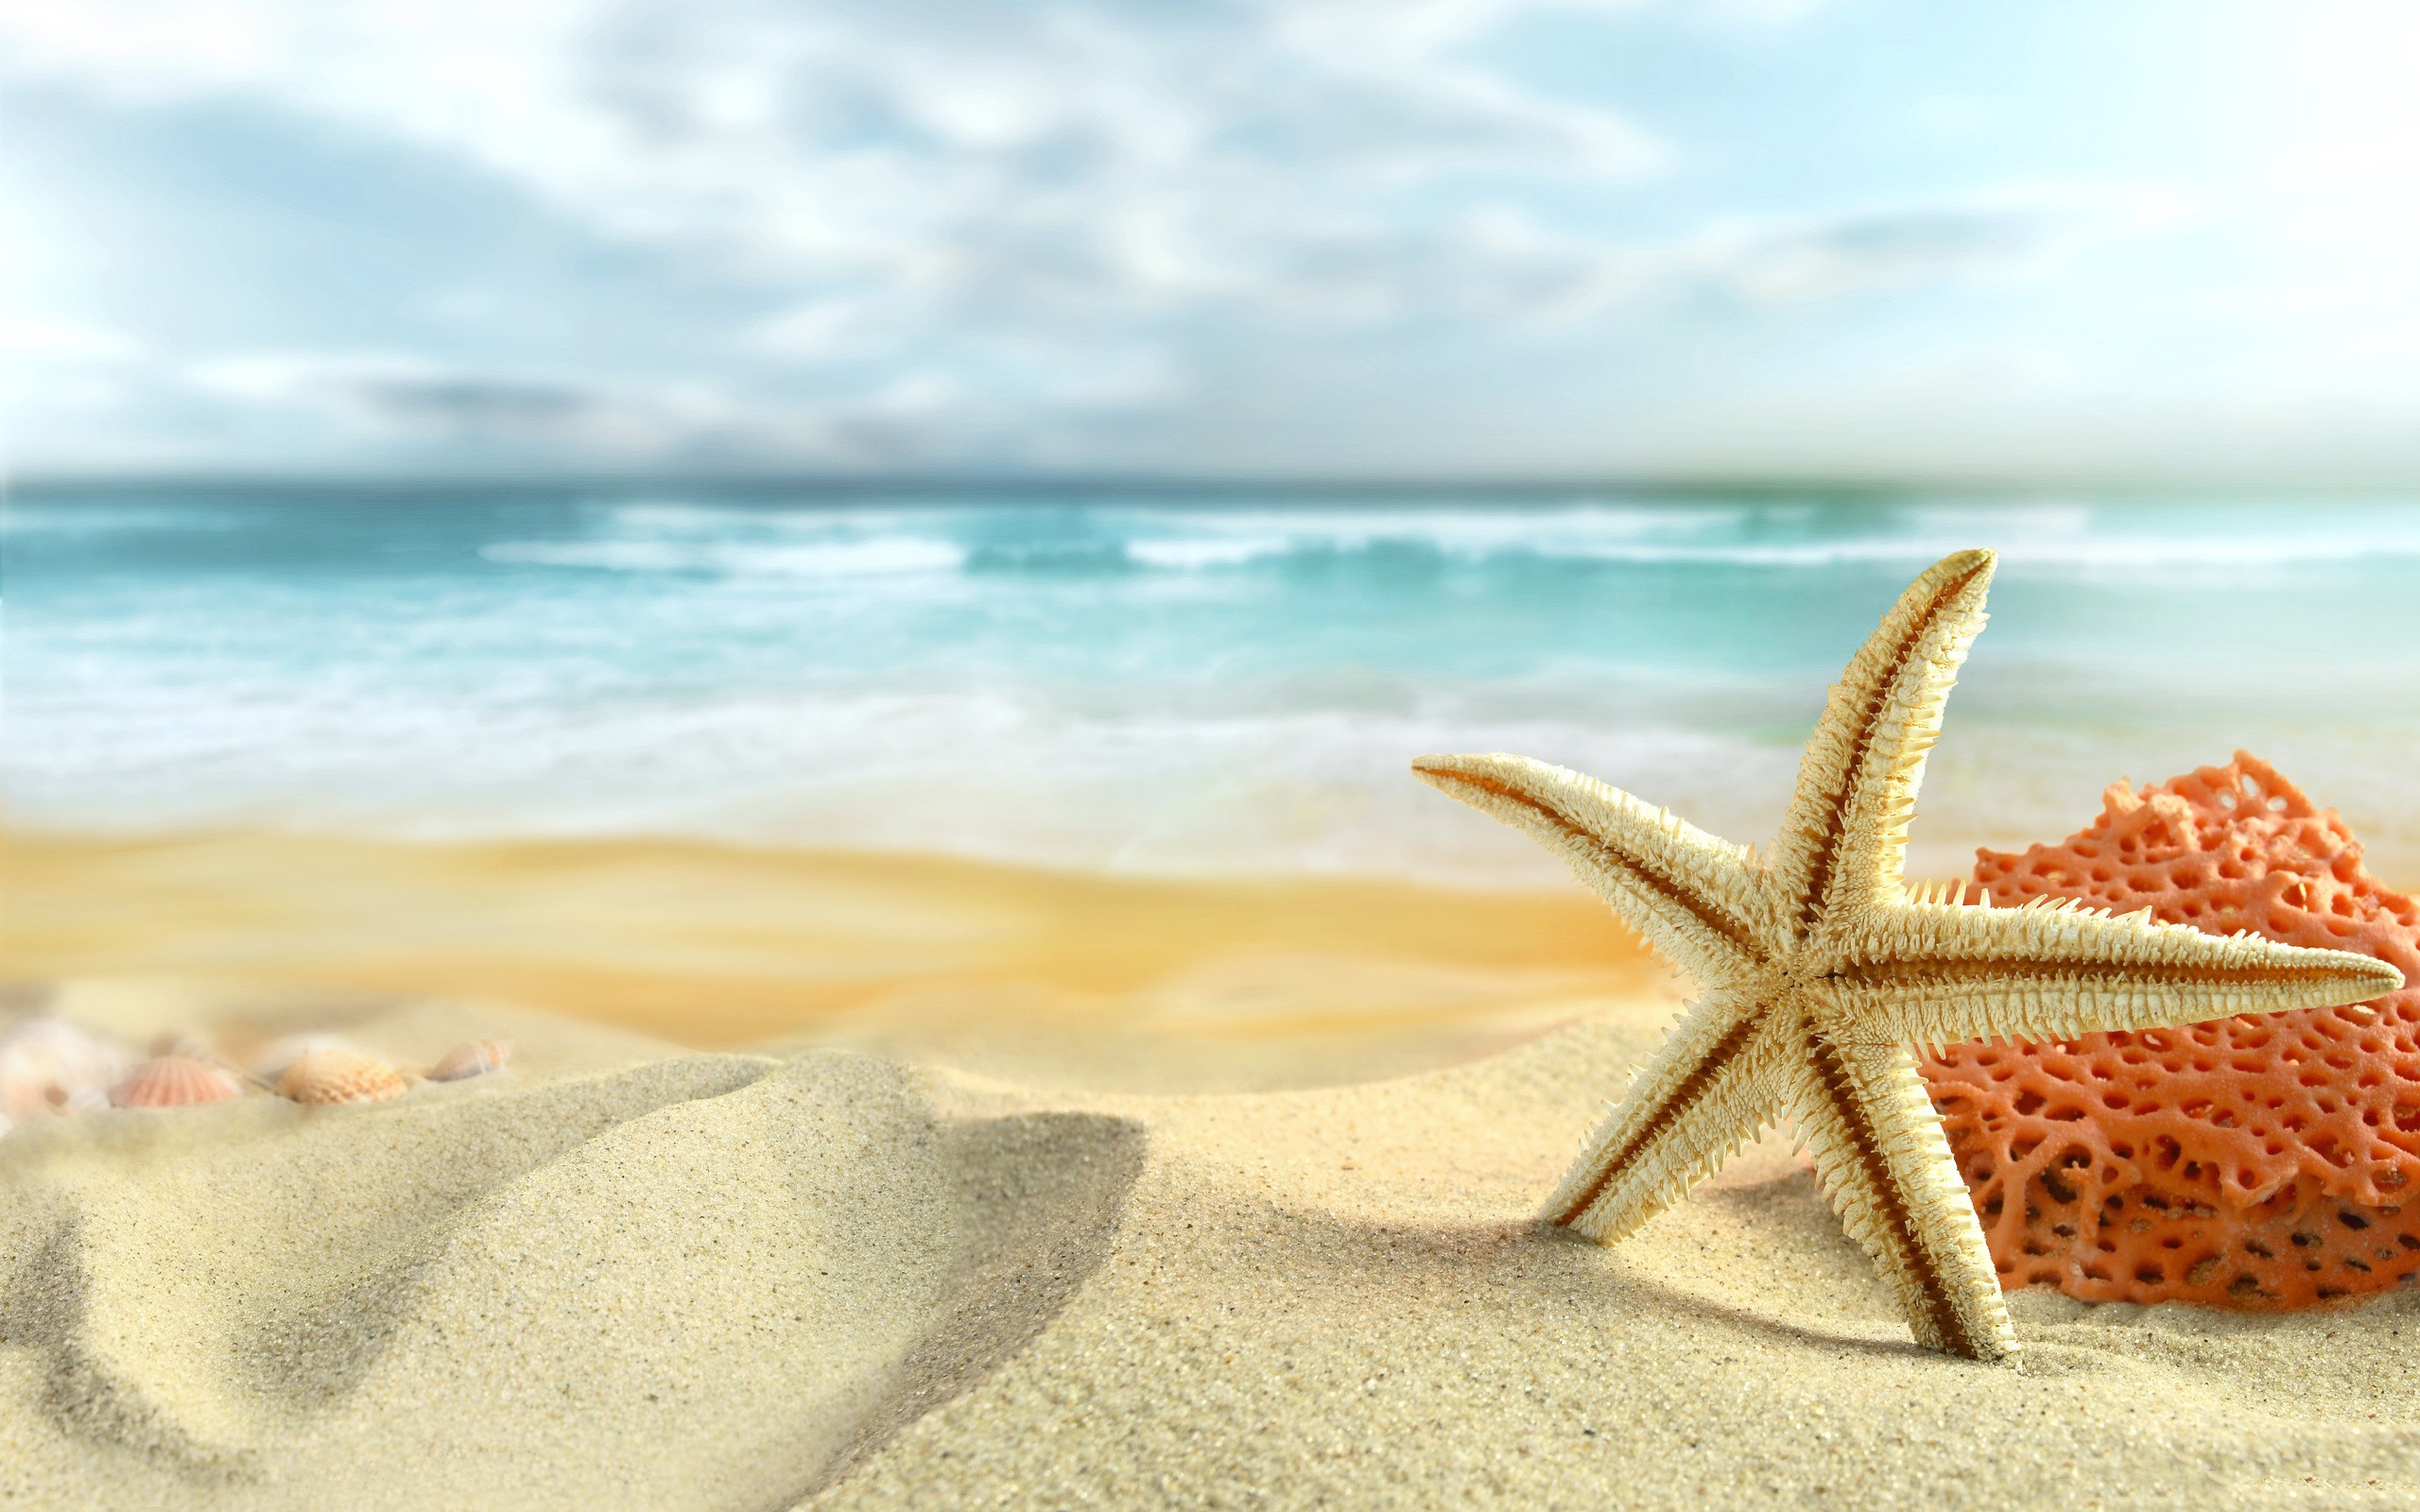 awesome starfish on beach image